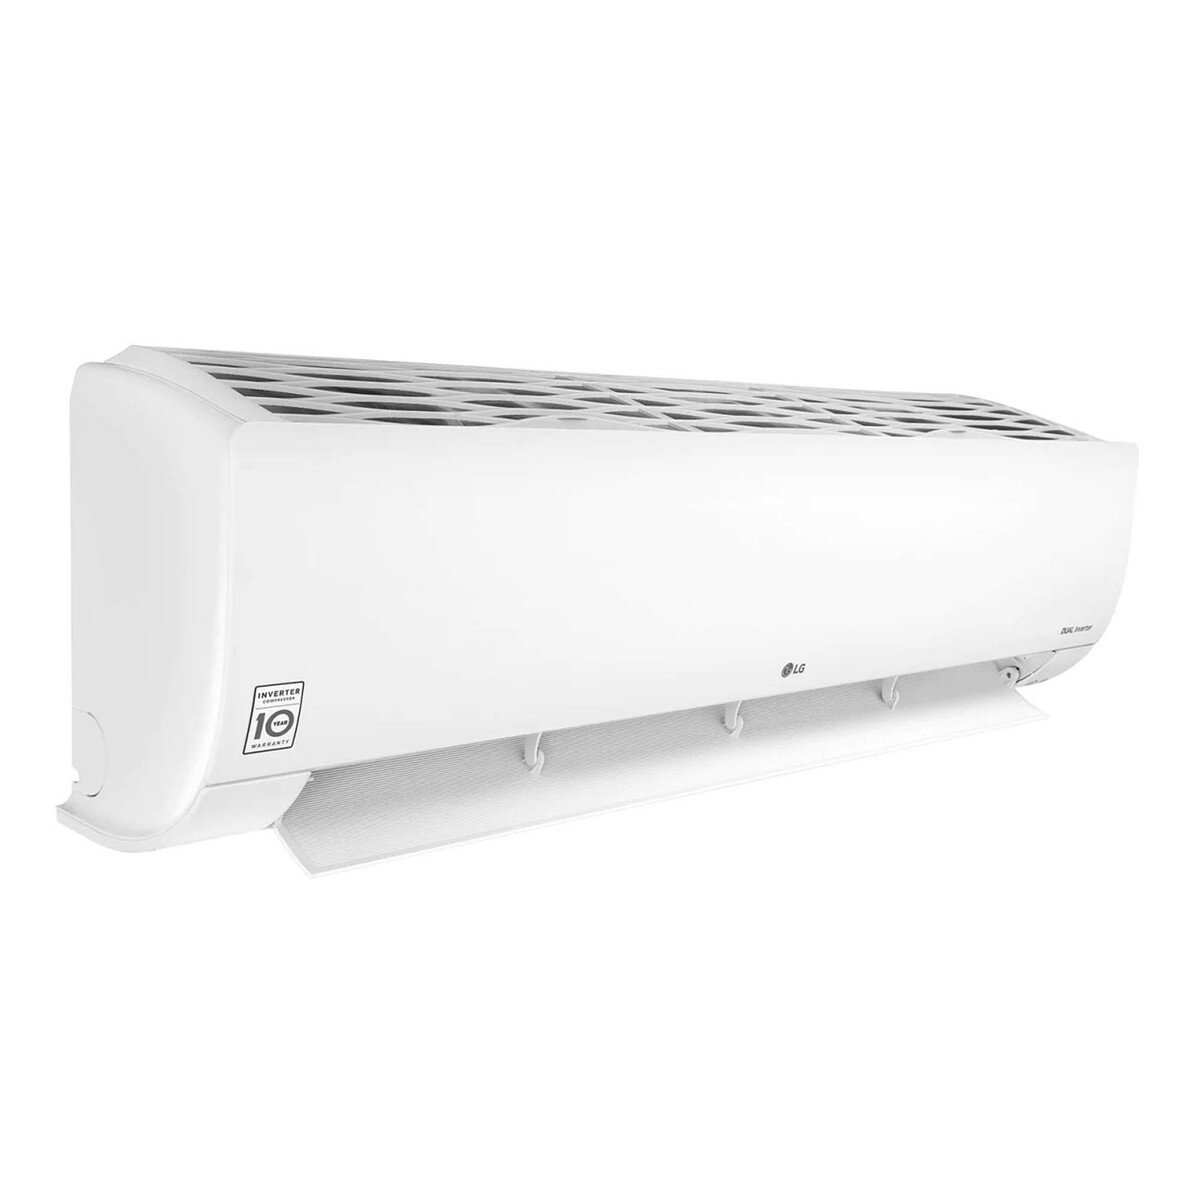 LG Split Air Conditioner i38TKF 3Ton, 65℃ Tropical inverter compressor, Faster cooling, More Energy saving